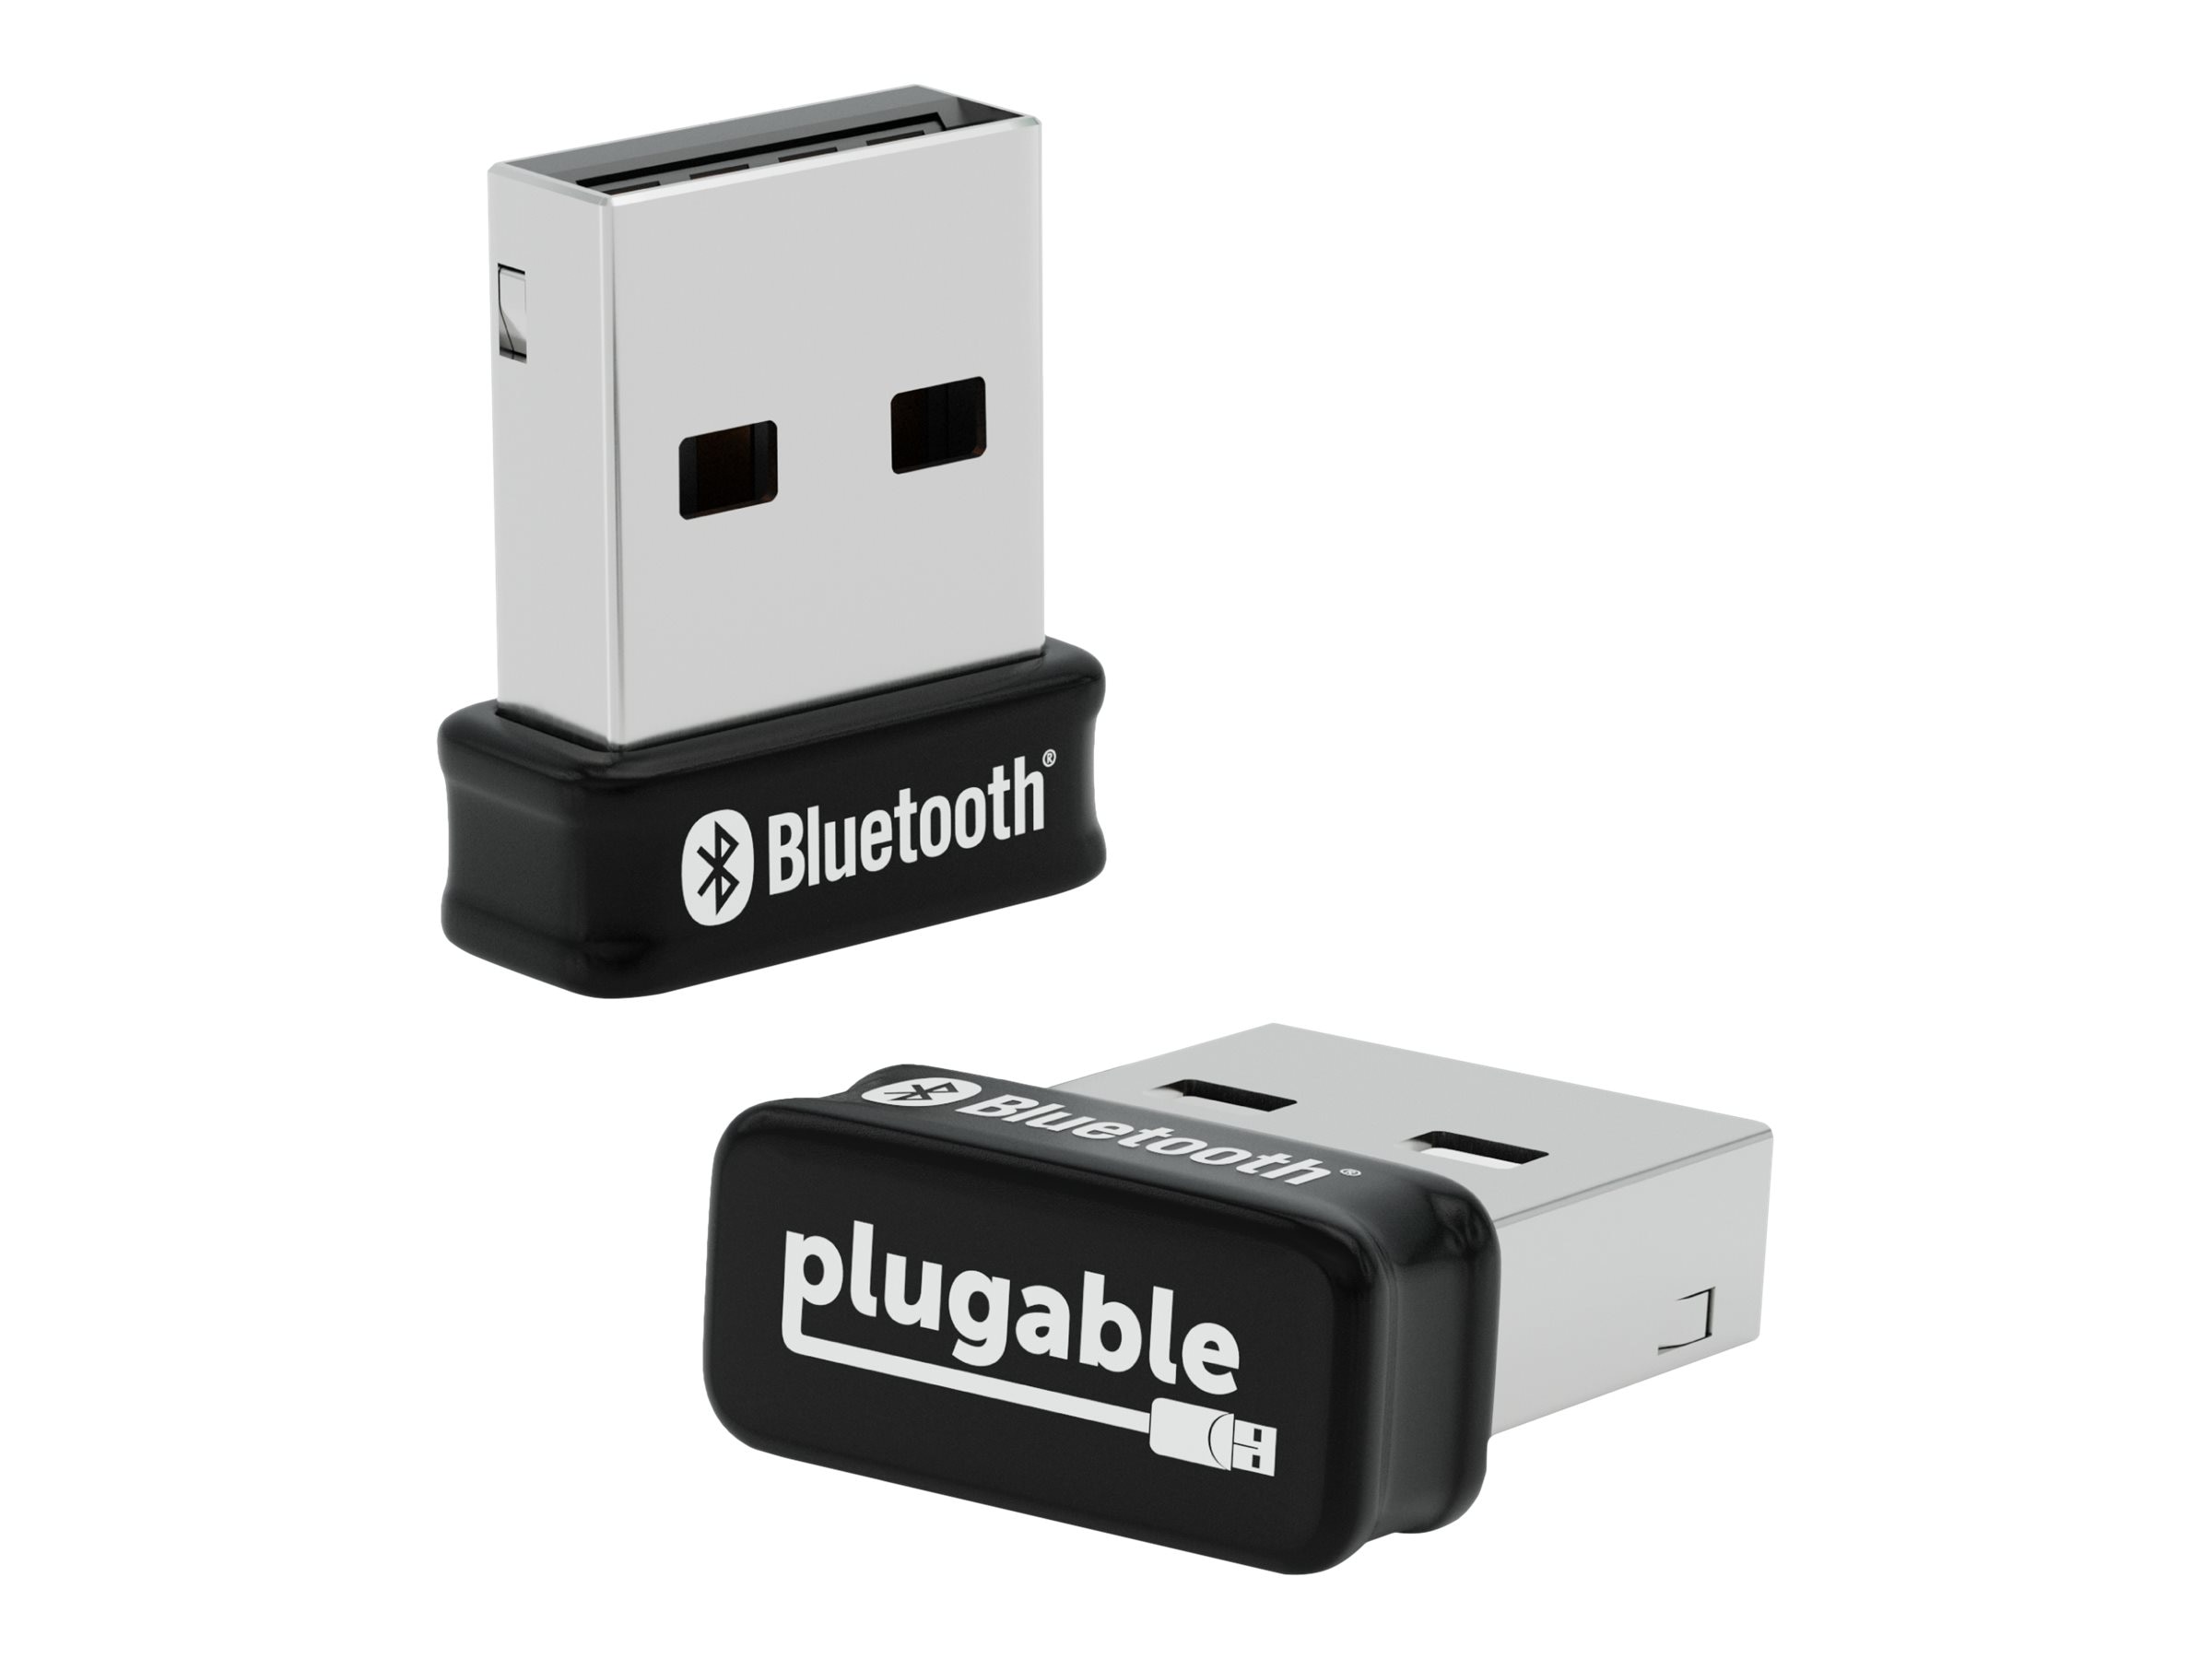 USB-BT5 - Plugable USB 2.0 TO BLUETOOTH 5 ADAPTER - MacConnection